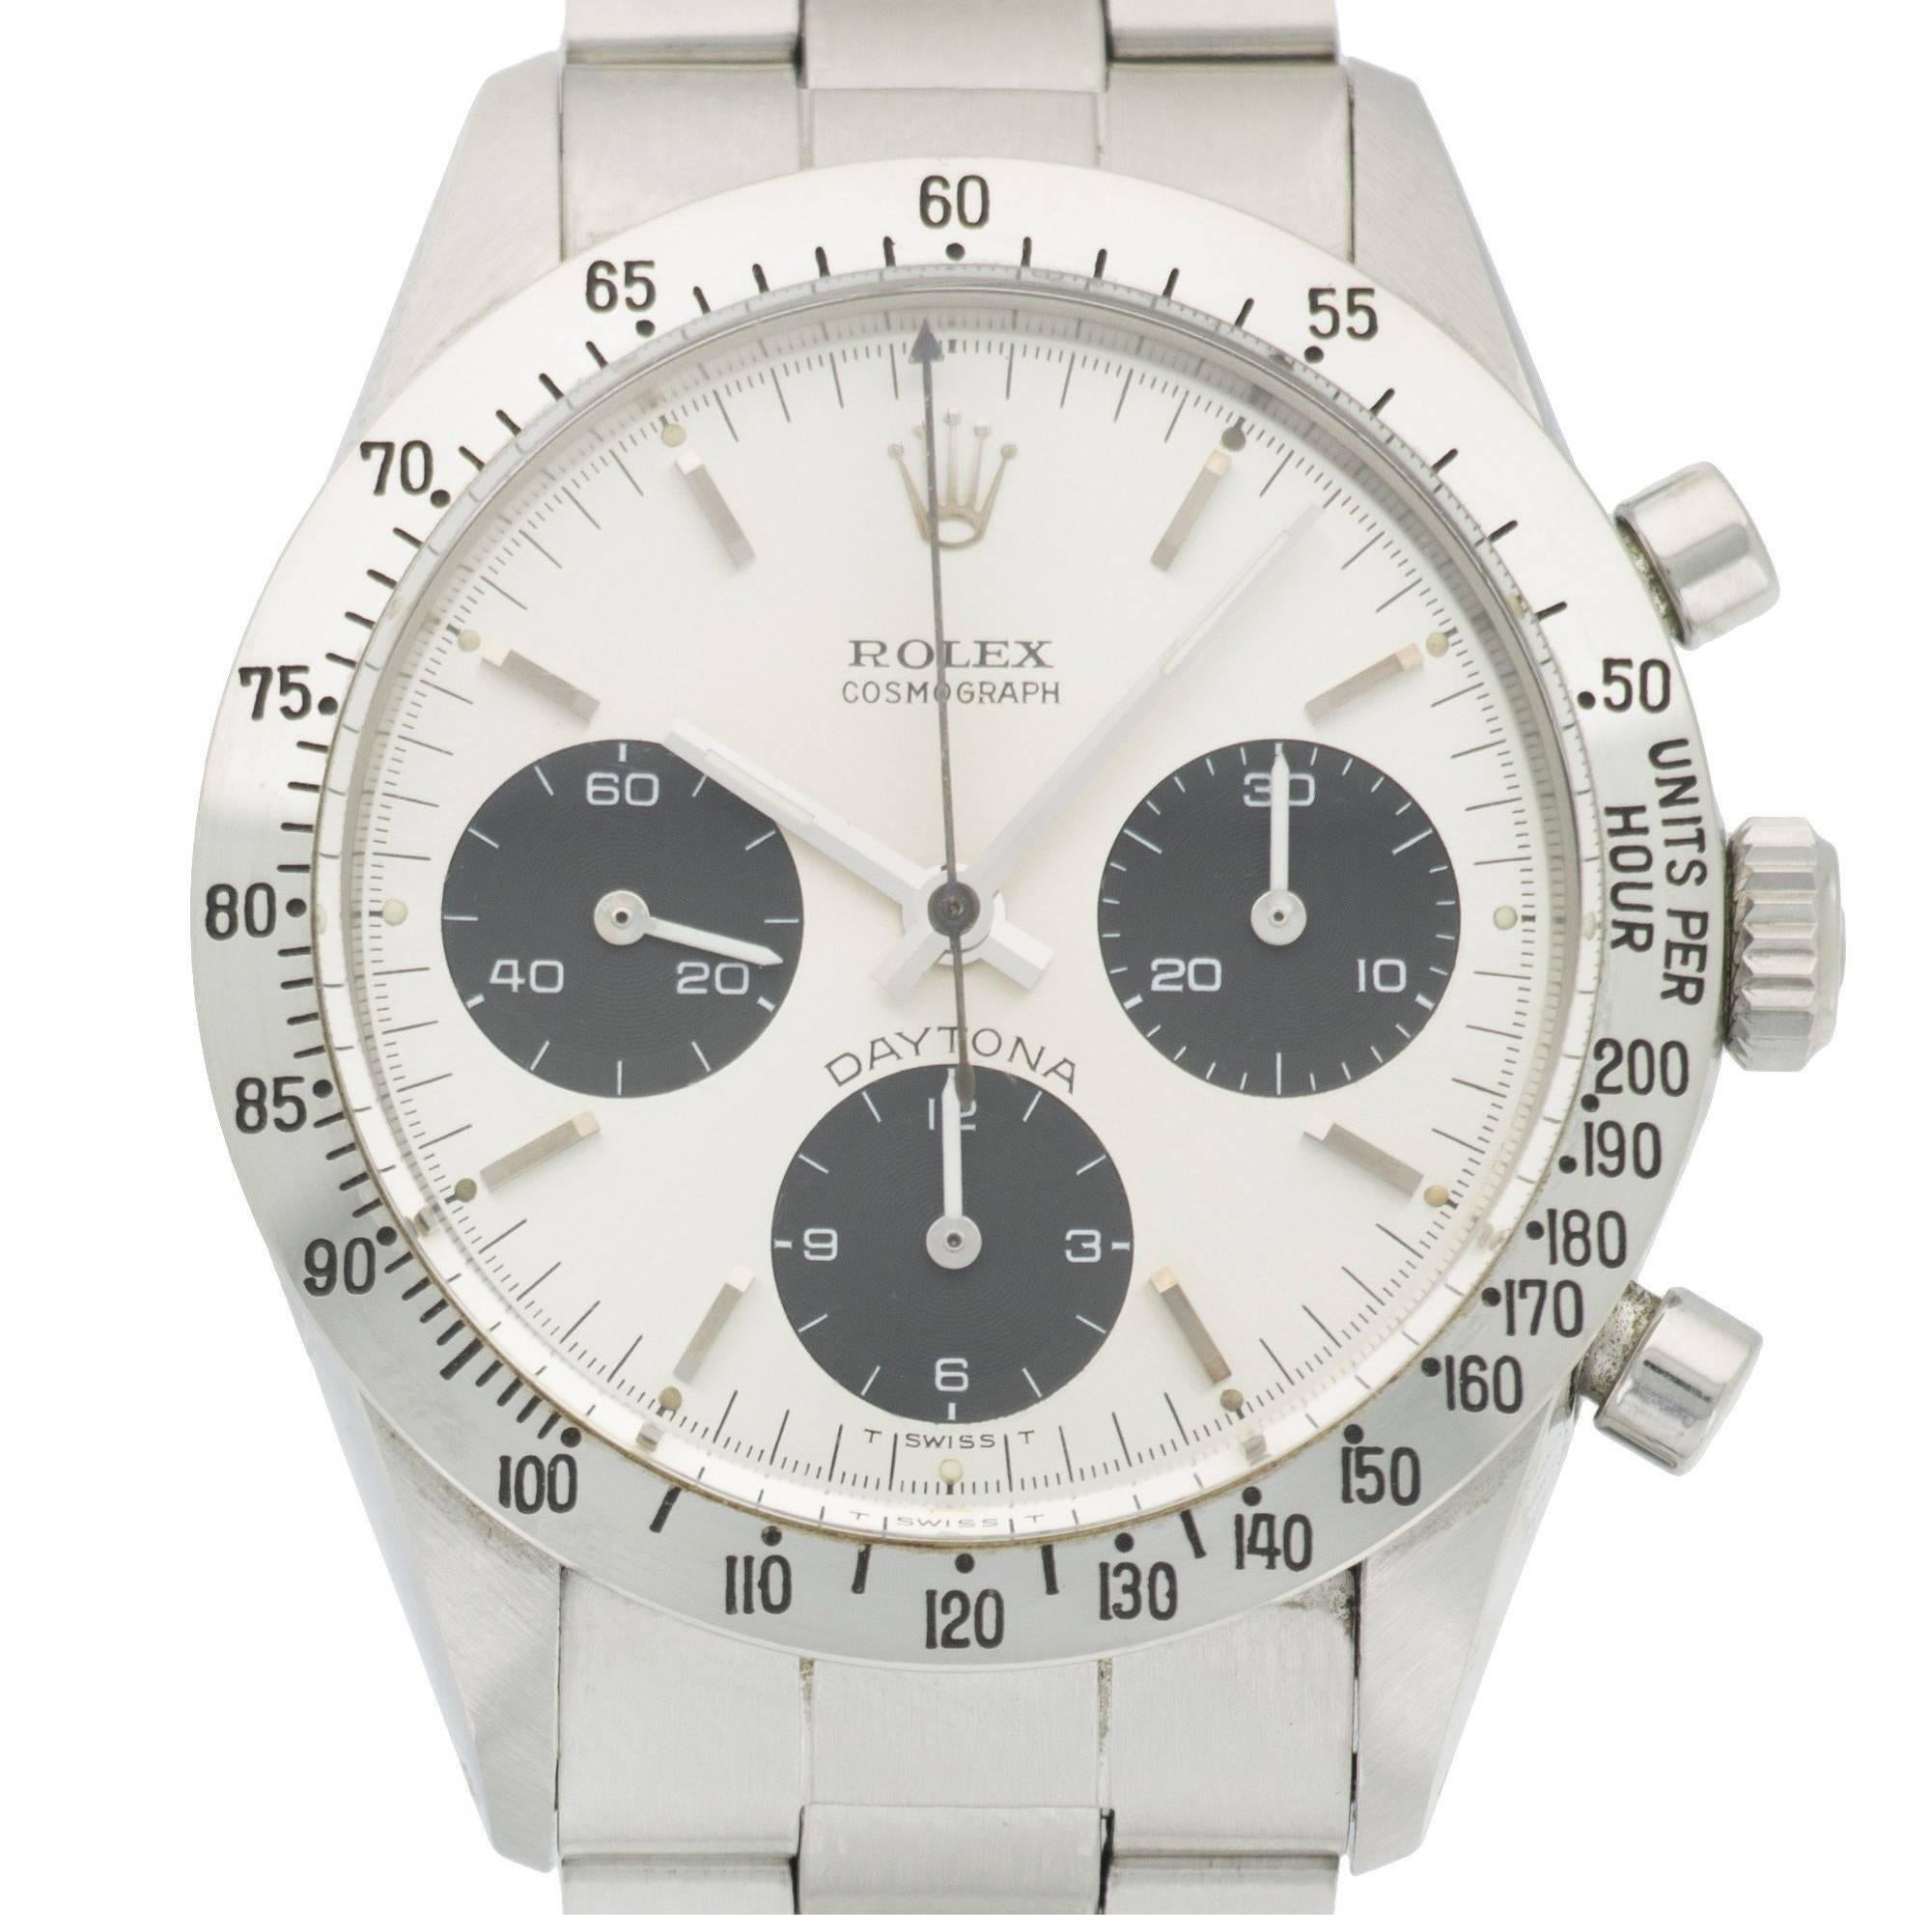 Rolex stainless steel Daytona wristwatch Ref 6262, 1970 